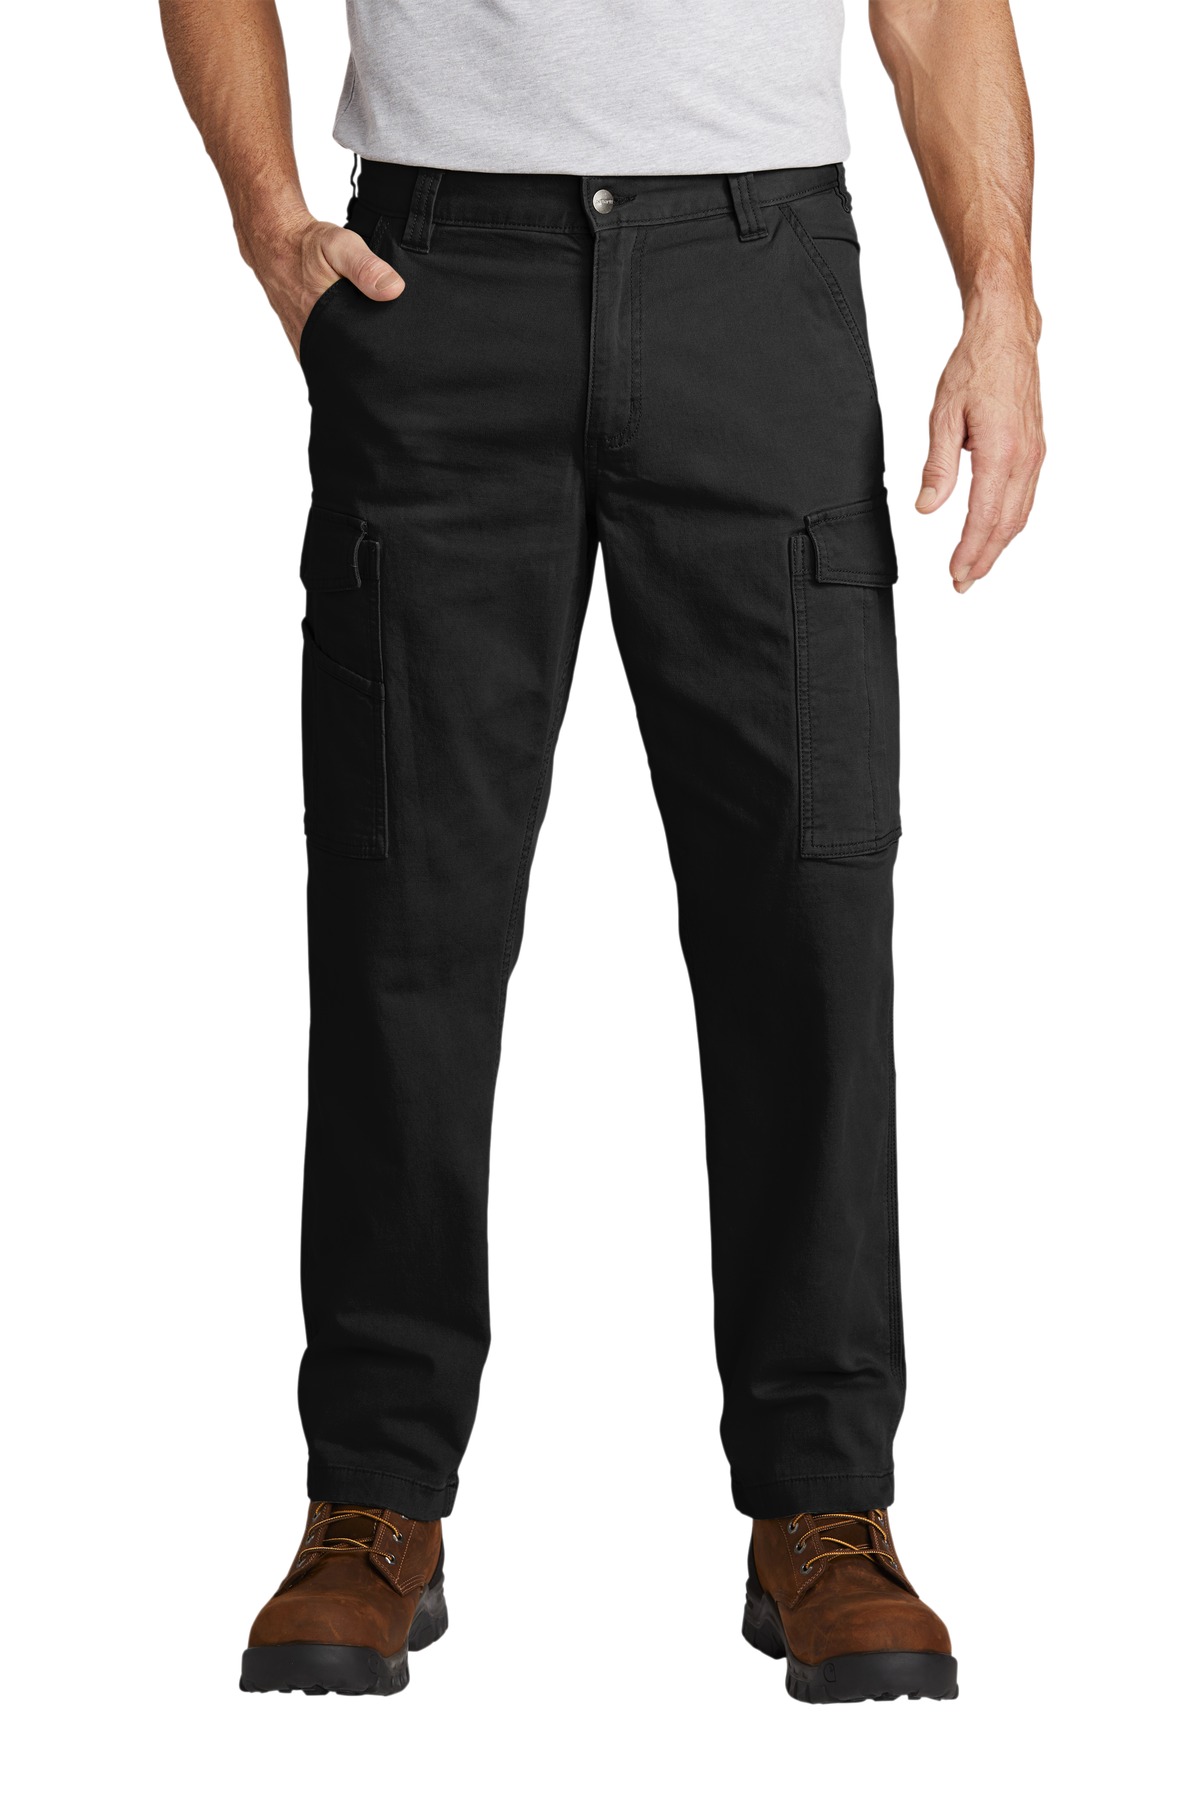 Industrial Work Pants/Shorts